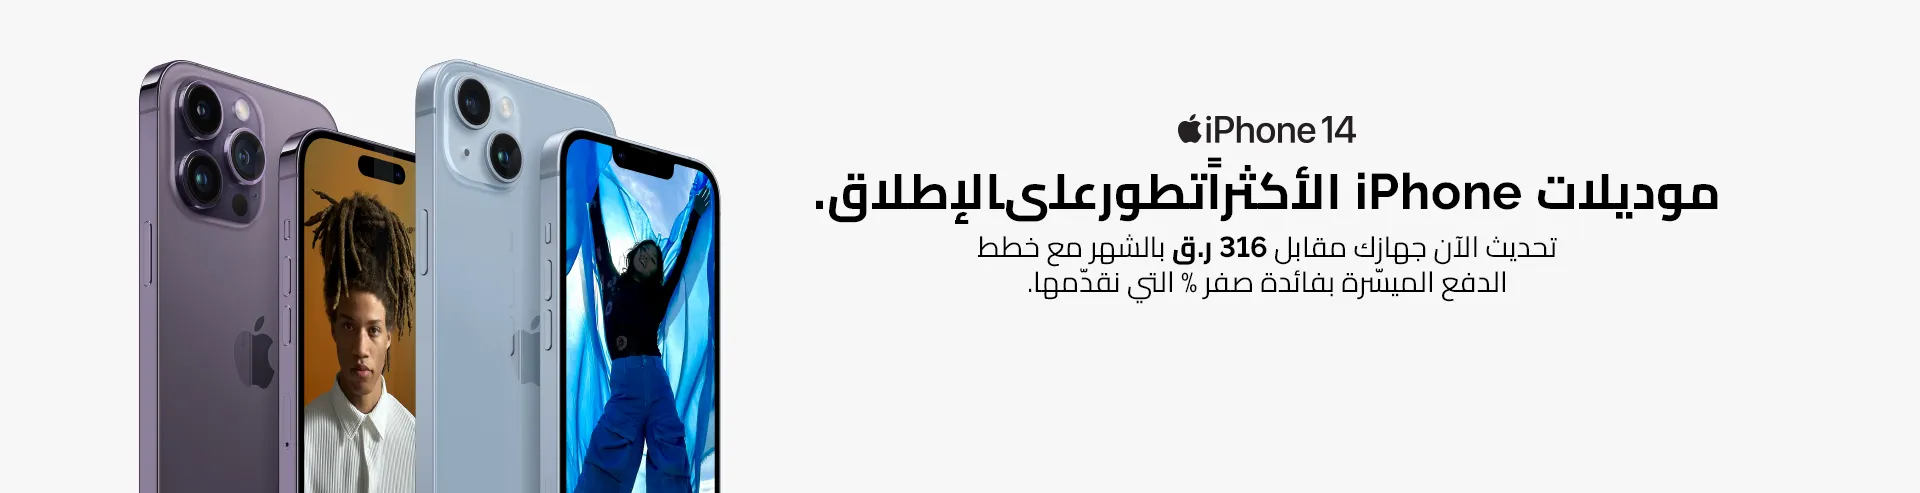 VM-Hero-Apple-iPhone-Upgraders-14-Qatar-AR-1920x493.webp